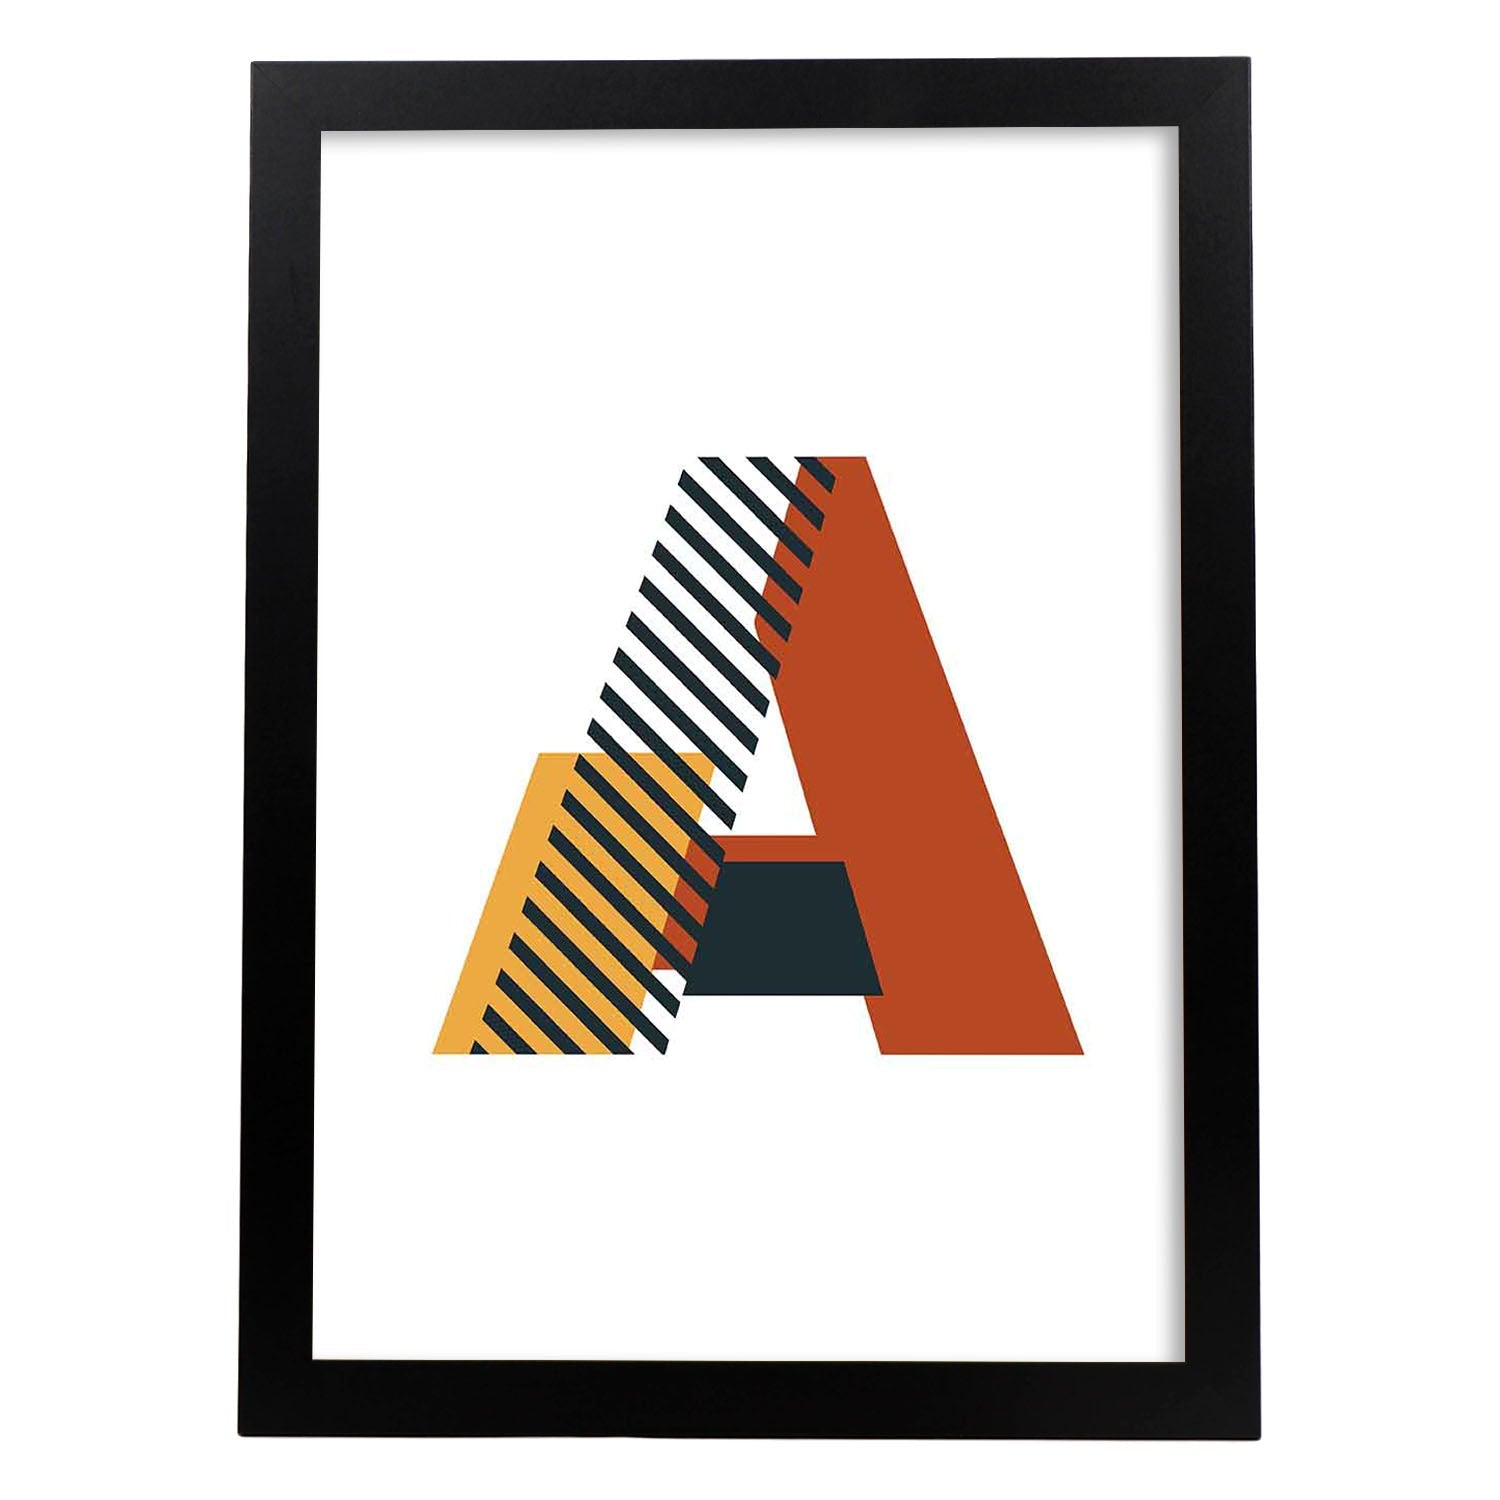 Poster de letra A. Lámina estilo Geometria con imágenes del alfabeto.-Artwork-Nacnic-A3-Marco Negro-Nacnic Estudio SL